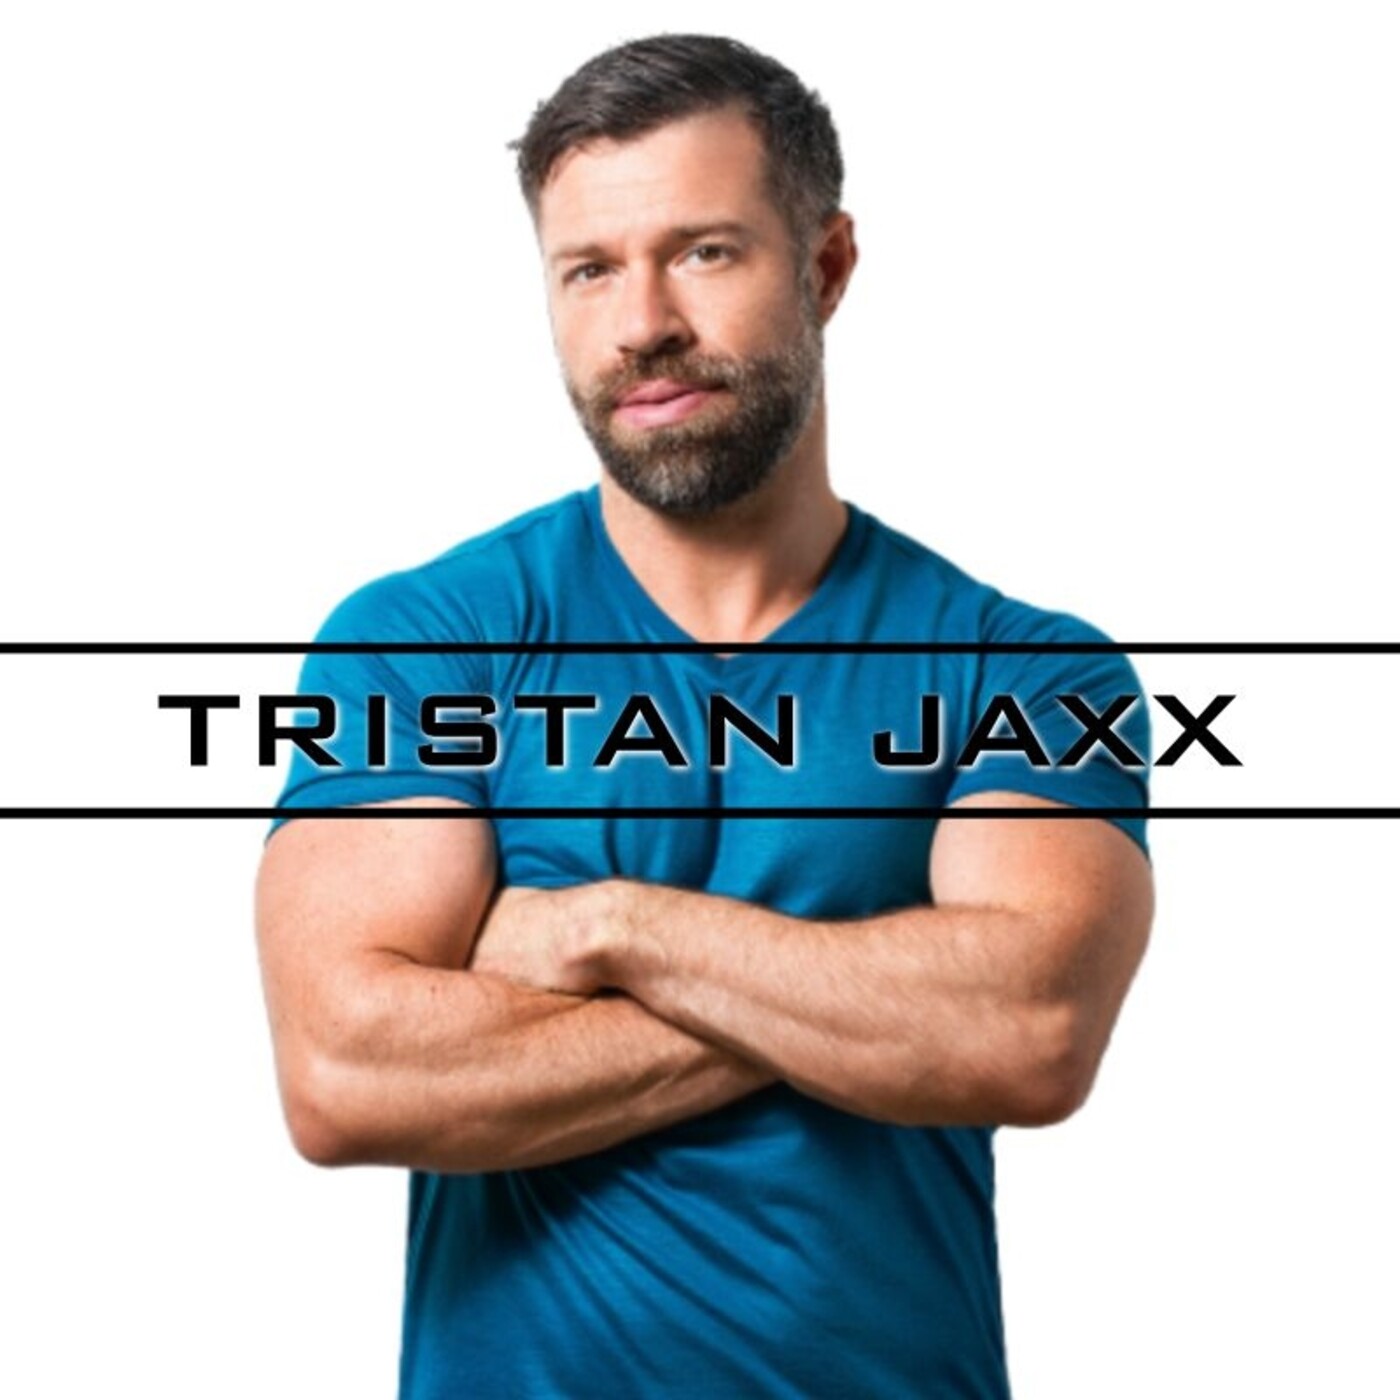 Tristan jaxx